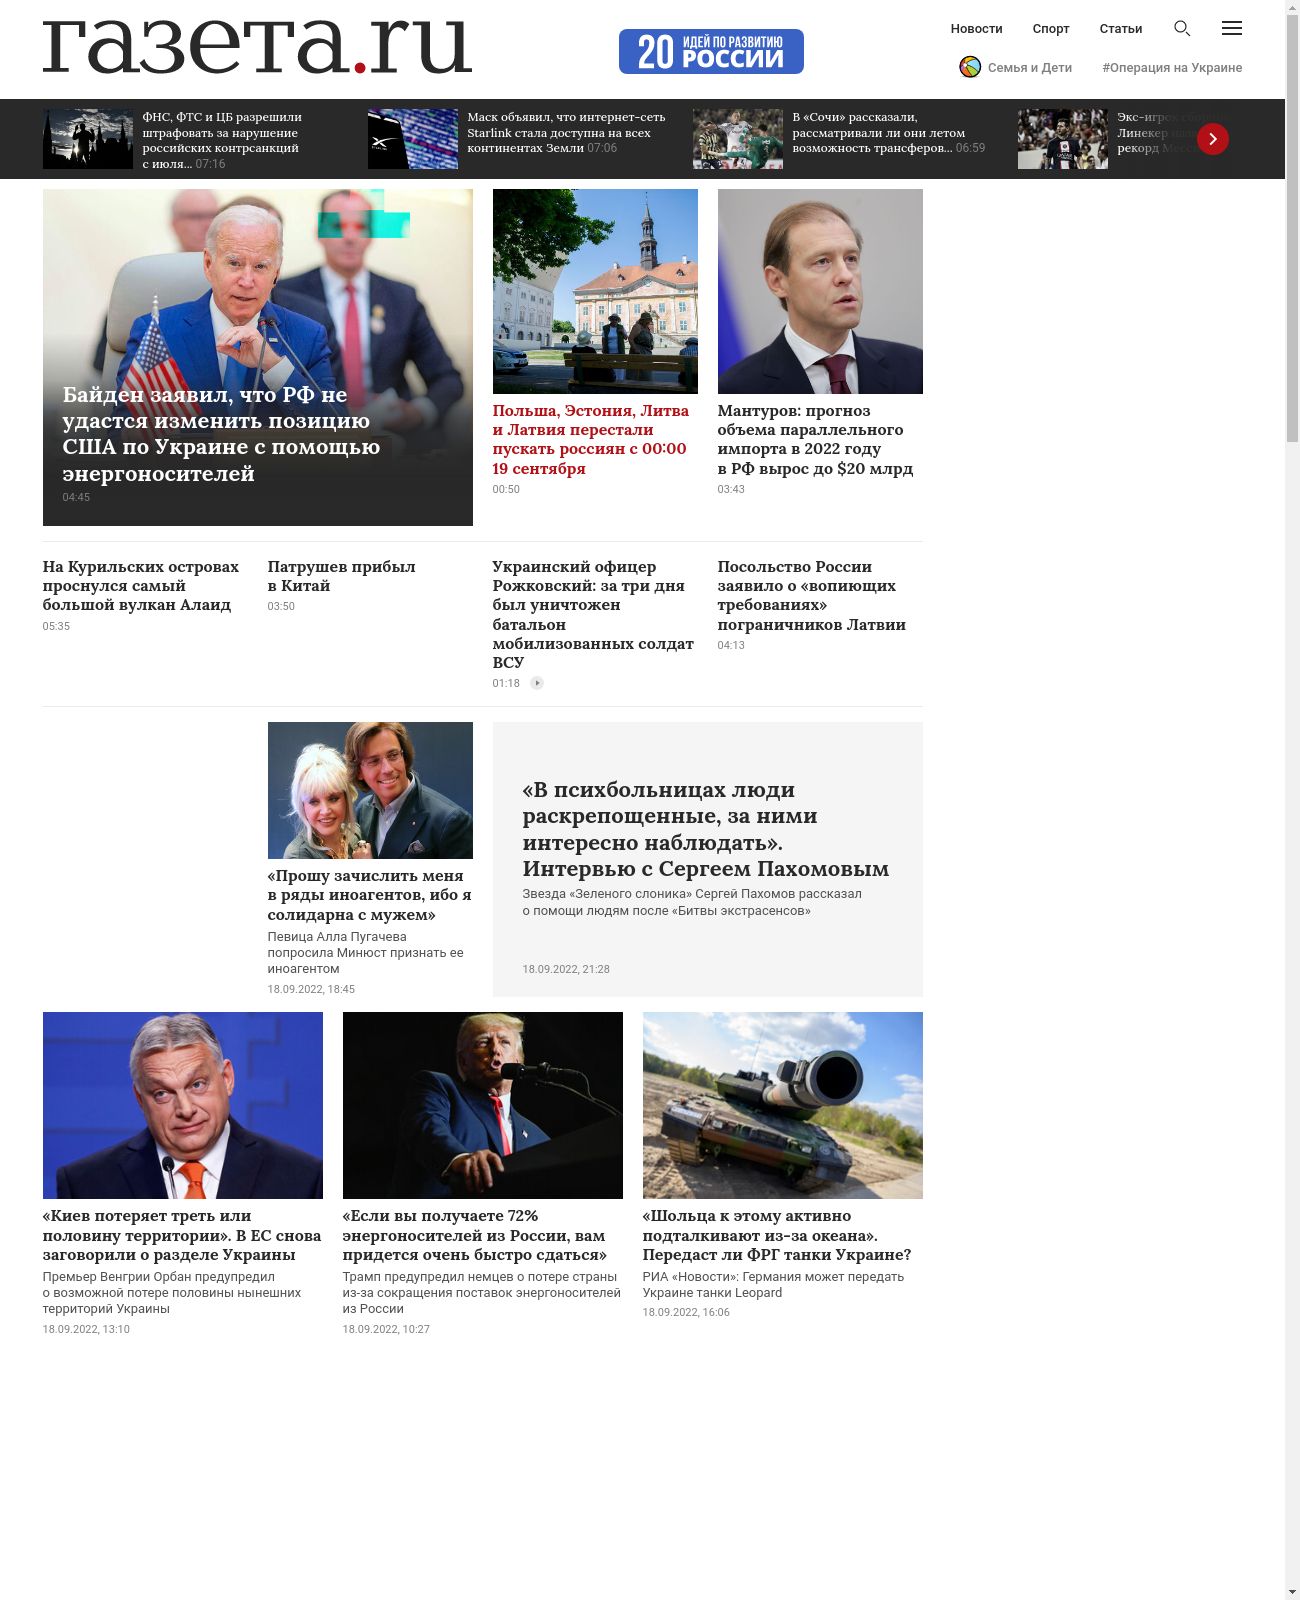 Gazeta.Ru at 2022-09-19 07:46:17+03:00 local time